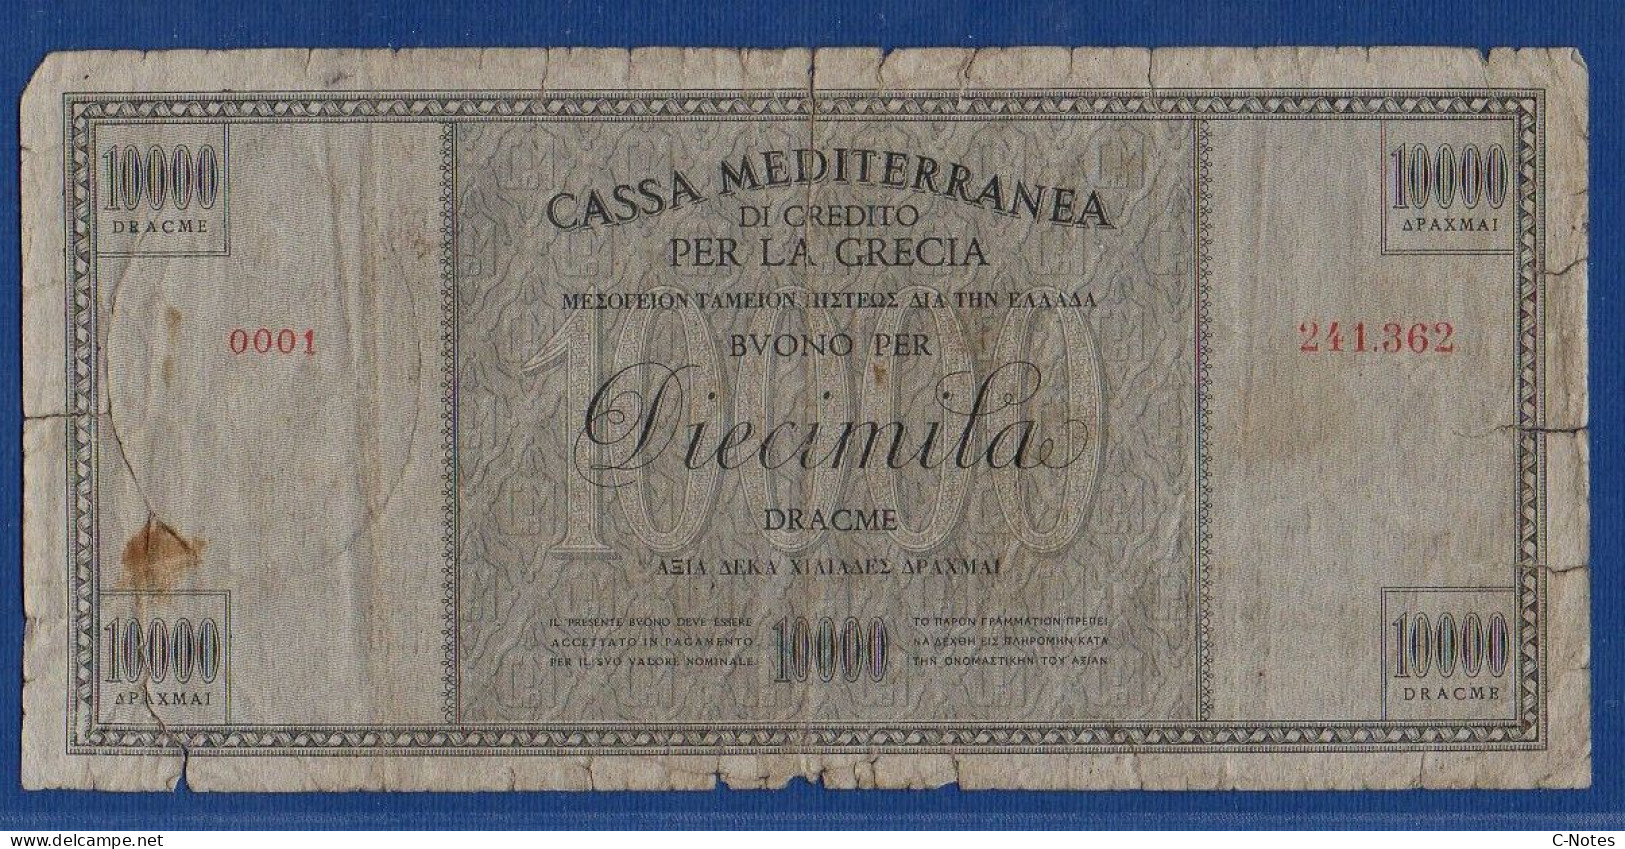 GREECE - Cassa Mediterranea Di Credito - P.M8 – 10000 DRACME ND 1941 - CIRCULATED - SERIE 0001 241.362 - Italienische Bes. Ägäis